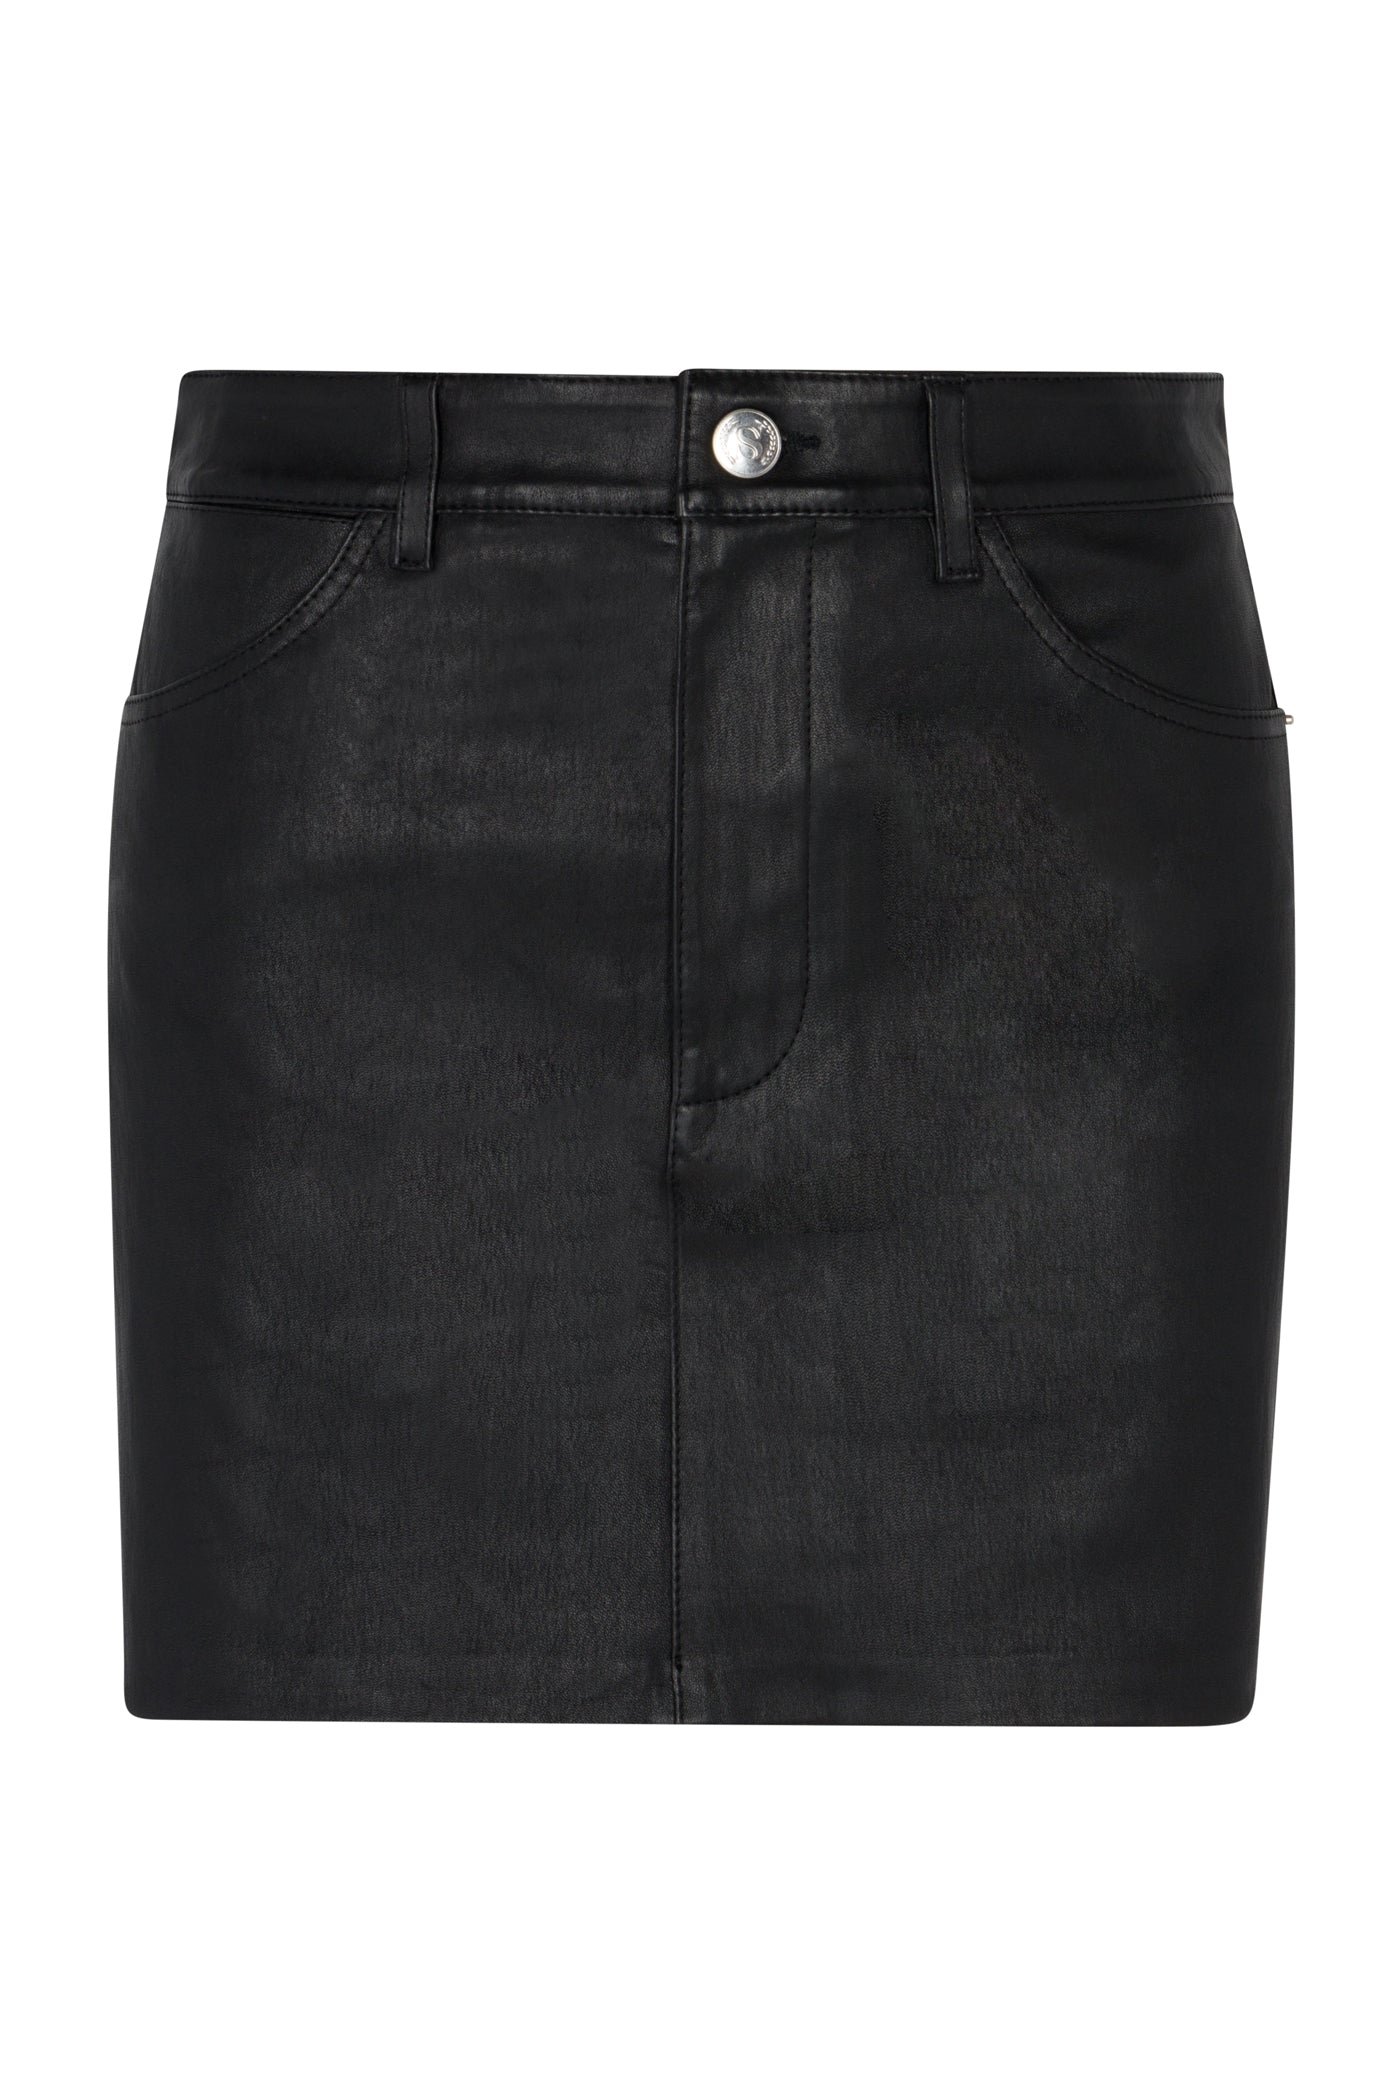 Black Leather 5 Pocket Mini Skirt